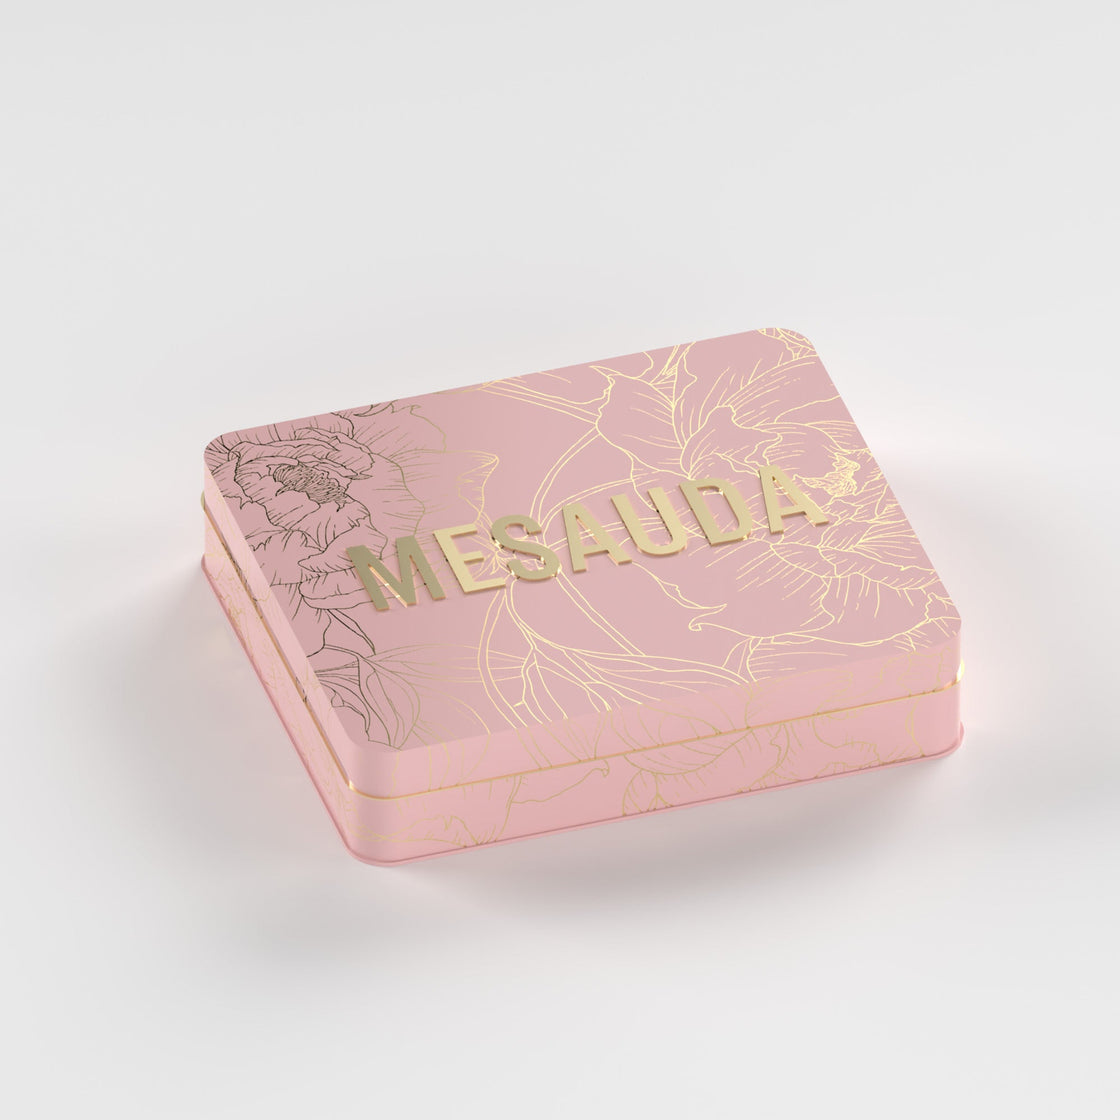 Mesauda Kit Cult Design Travel Size Lipsticks